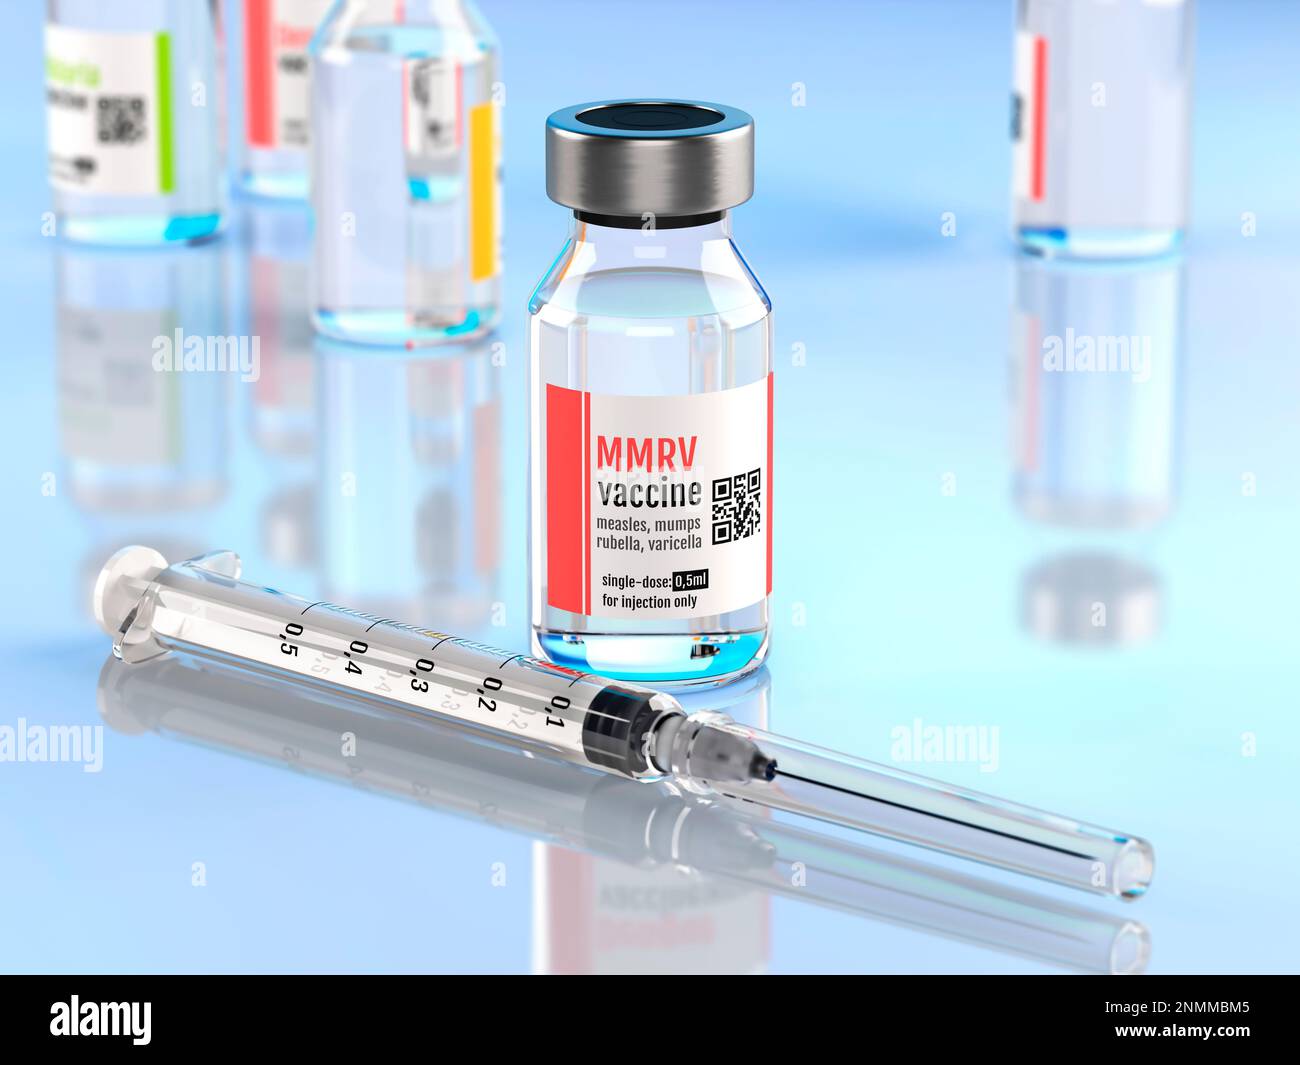 MMR vaccine, illustration Stock Photo